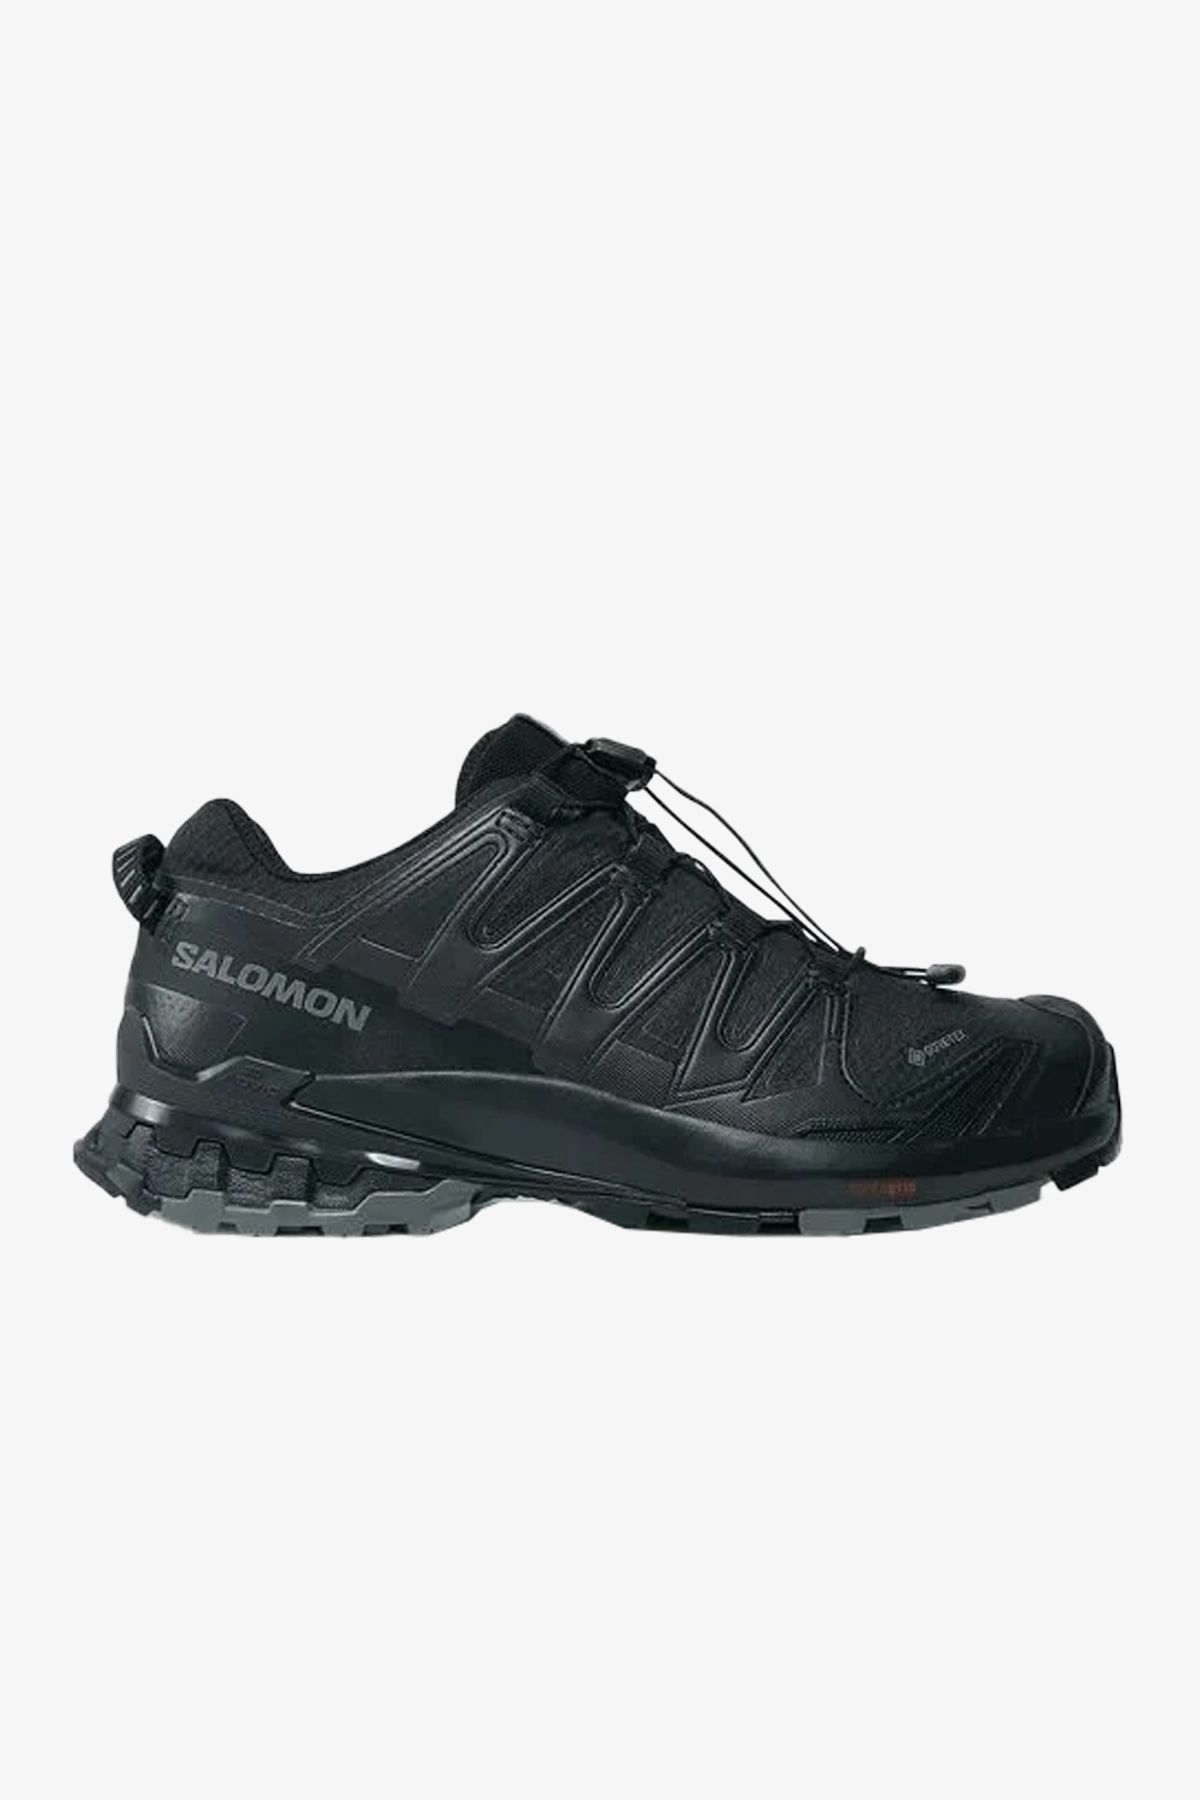 Salomon Xa Pro 3d V9 Gtx W Siyah Kadın Patika Koşu Ayakkabısı L47270800-31075